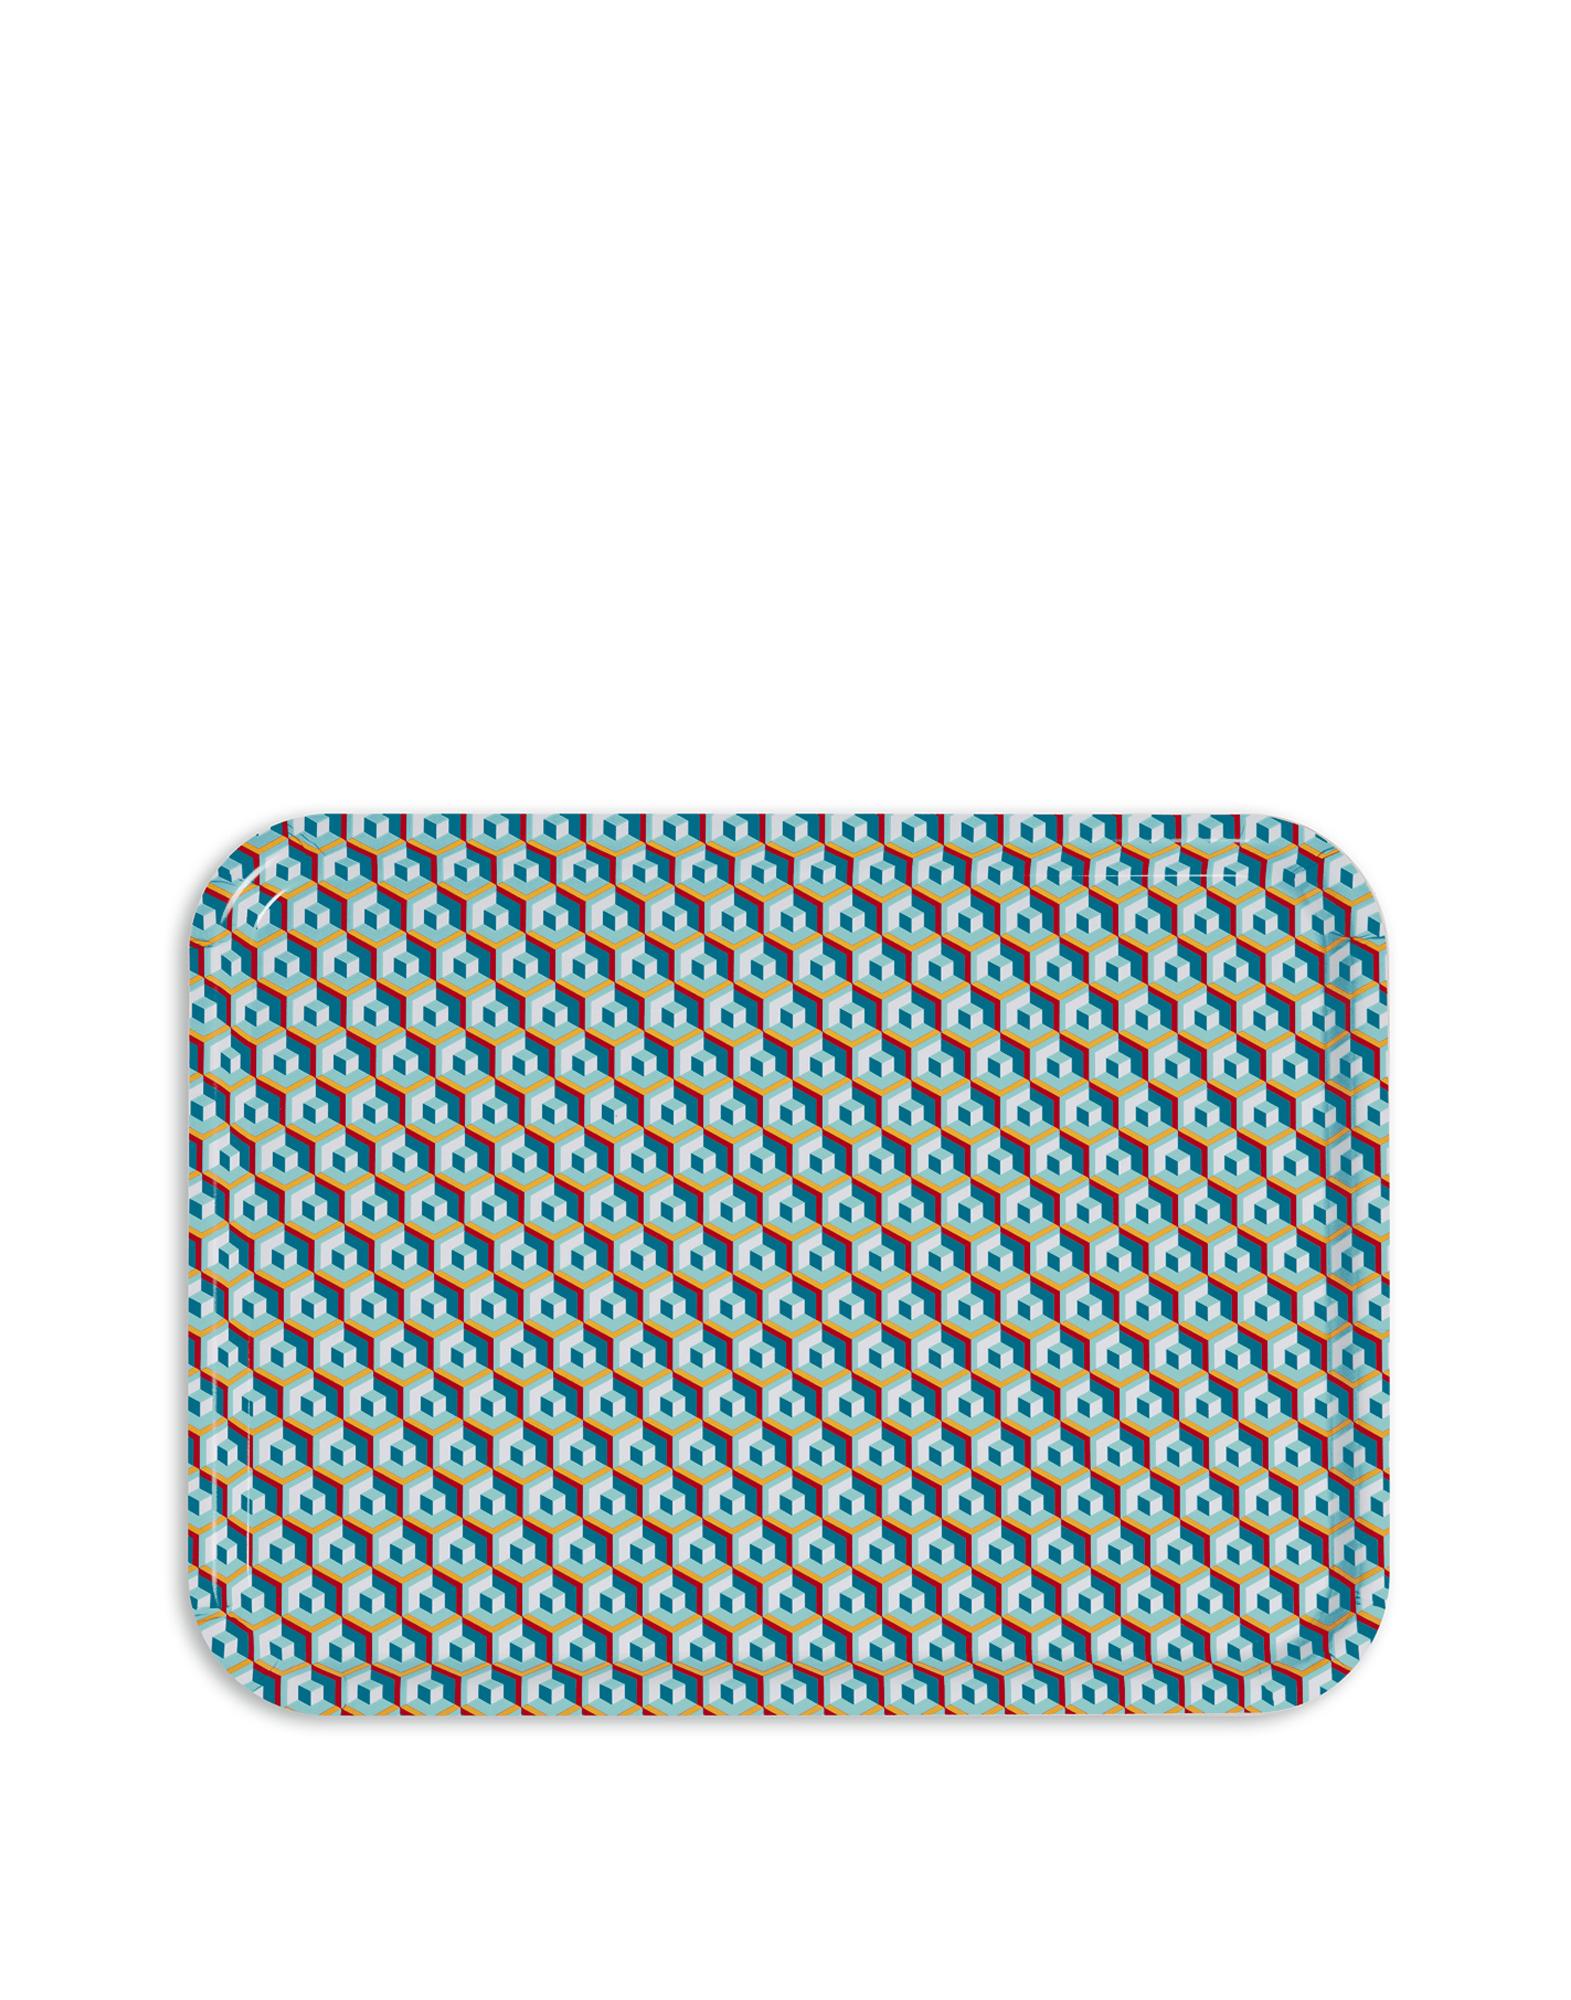 Italian Rectangular Tray Cubi Blu Print, 100% Laminated Birch by La DoubleJ